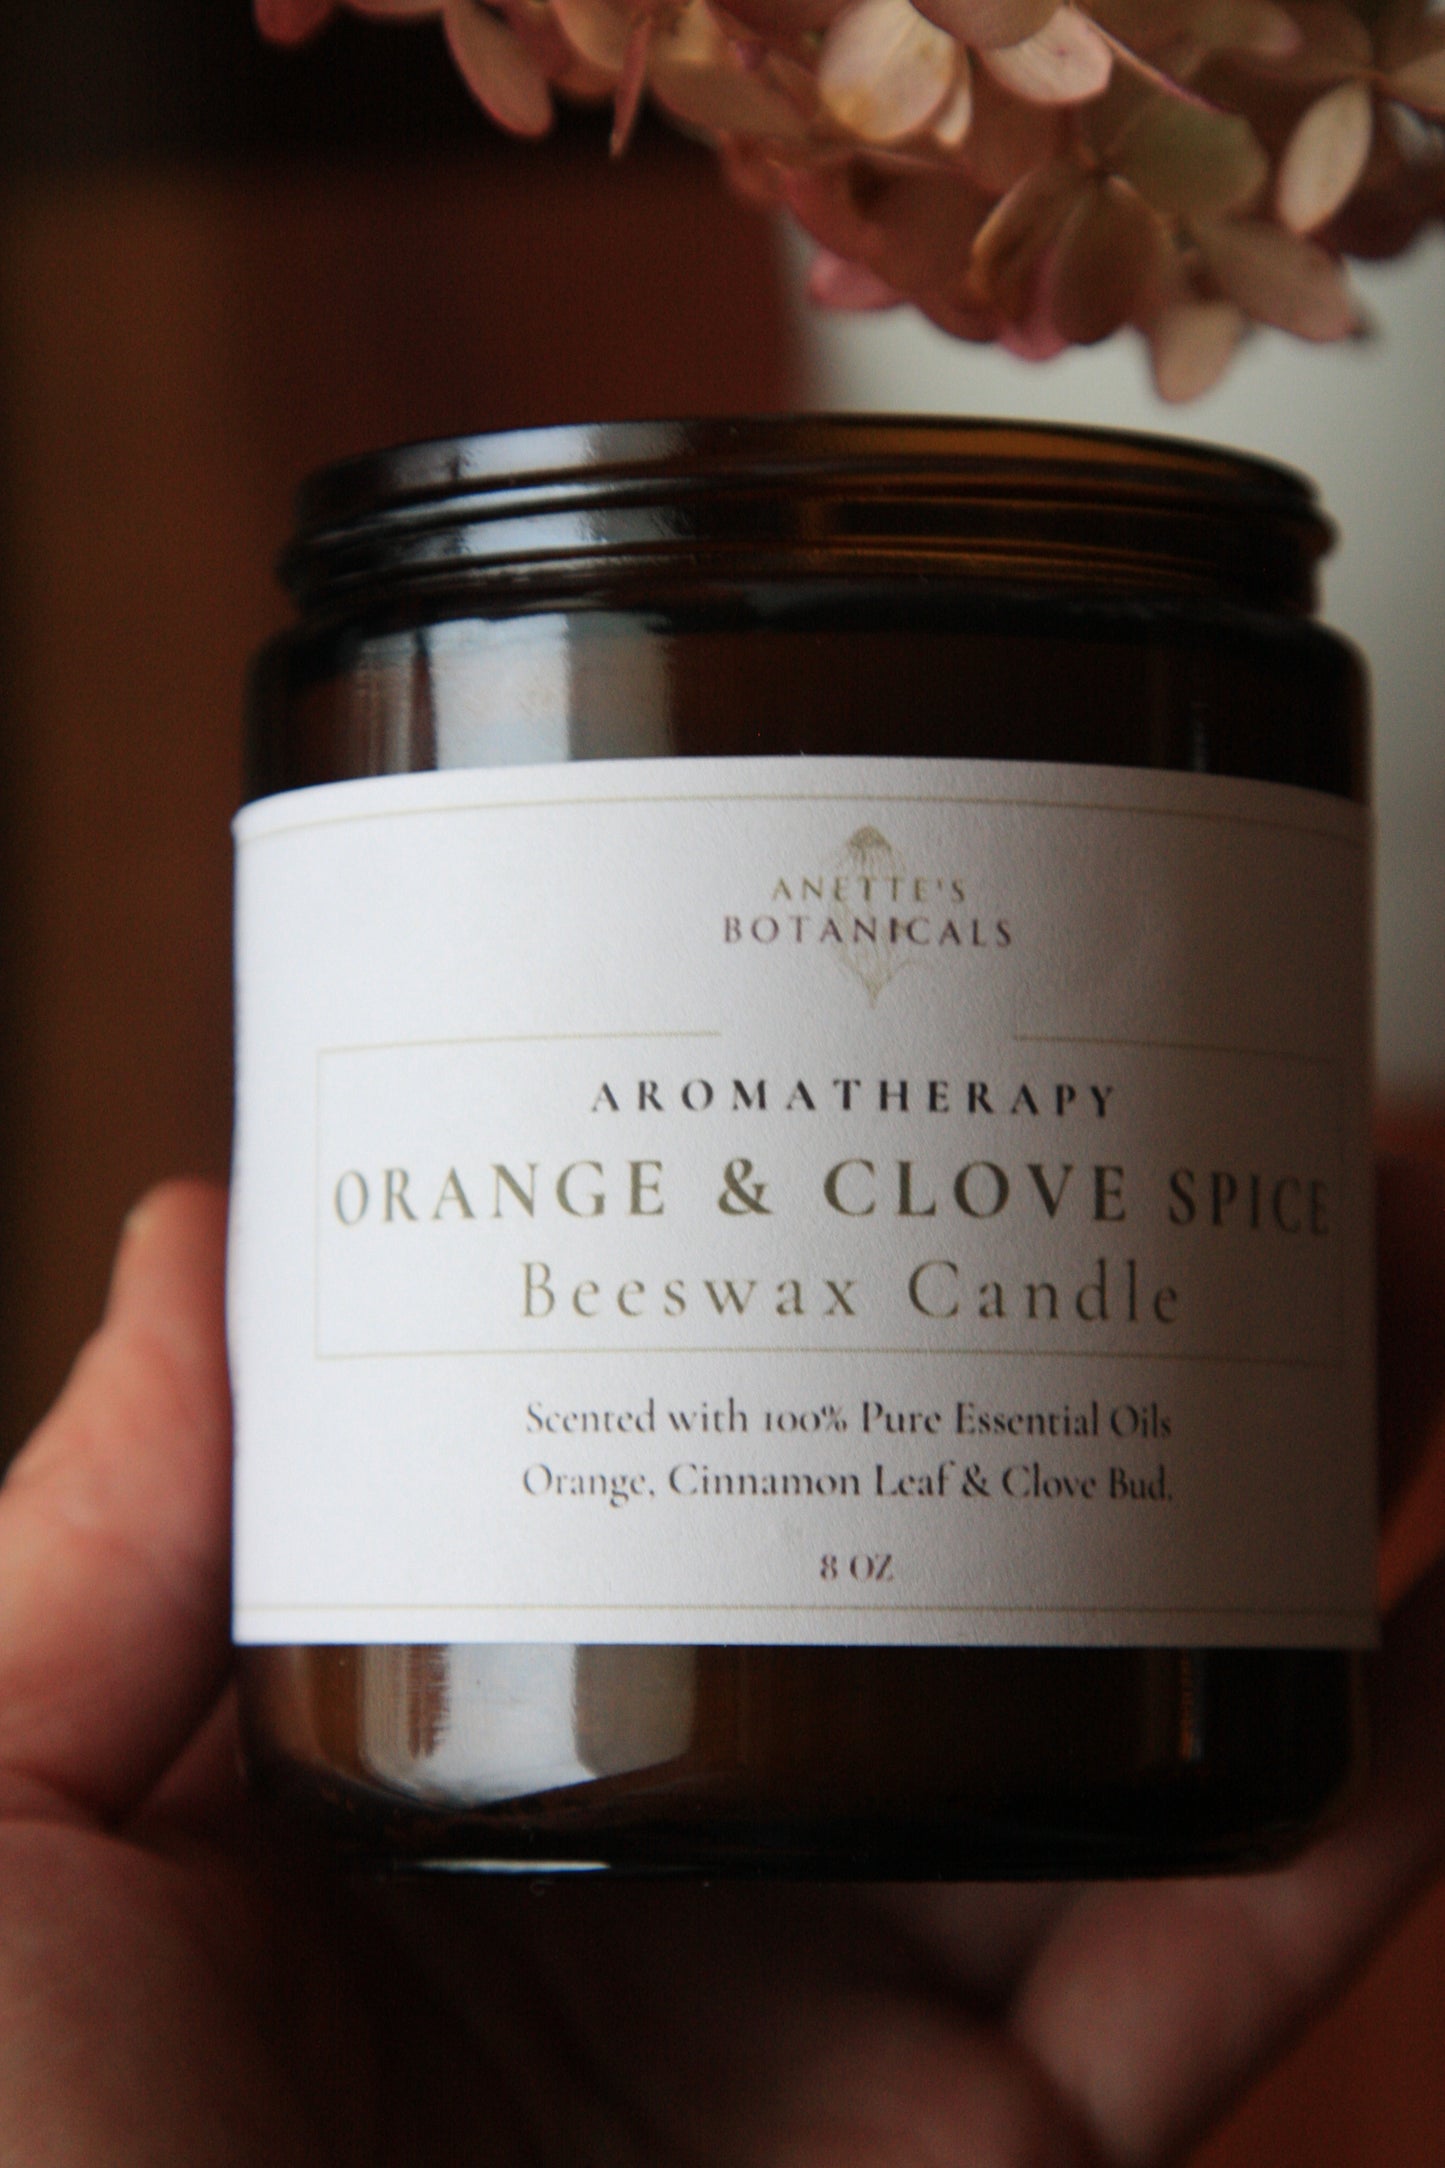 Orange & Clove Spice Beeswax Candle